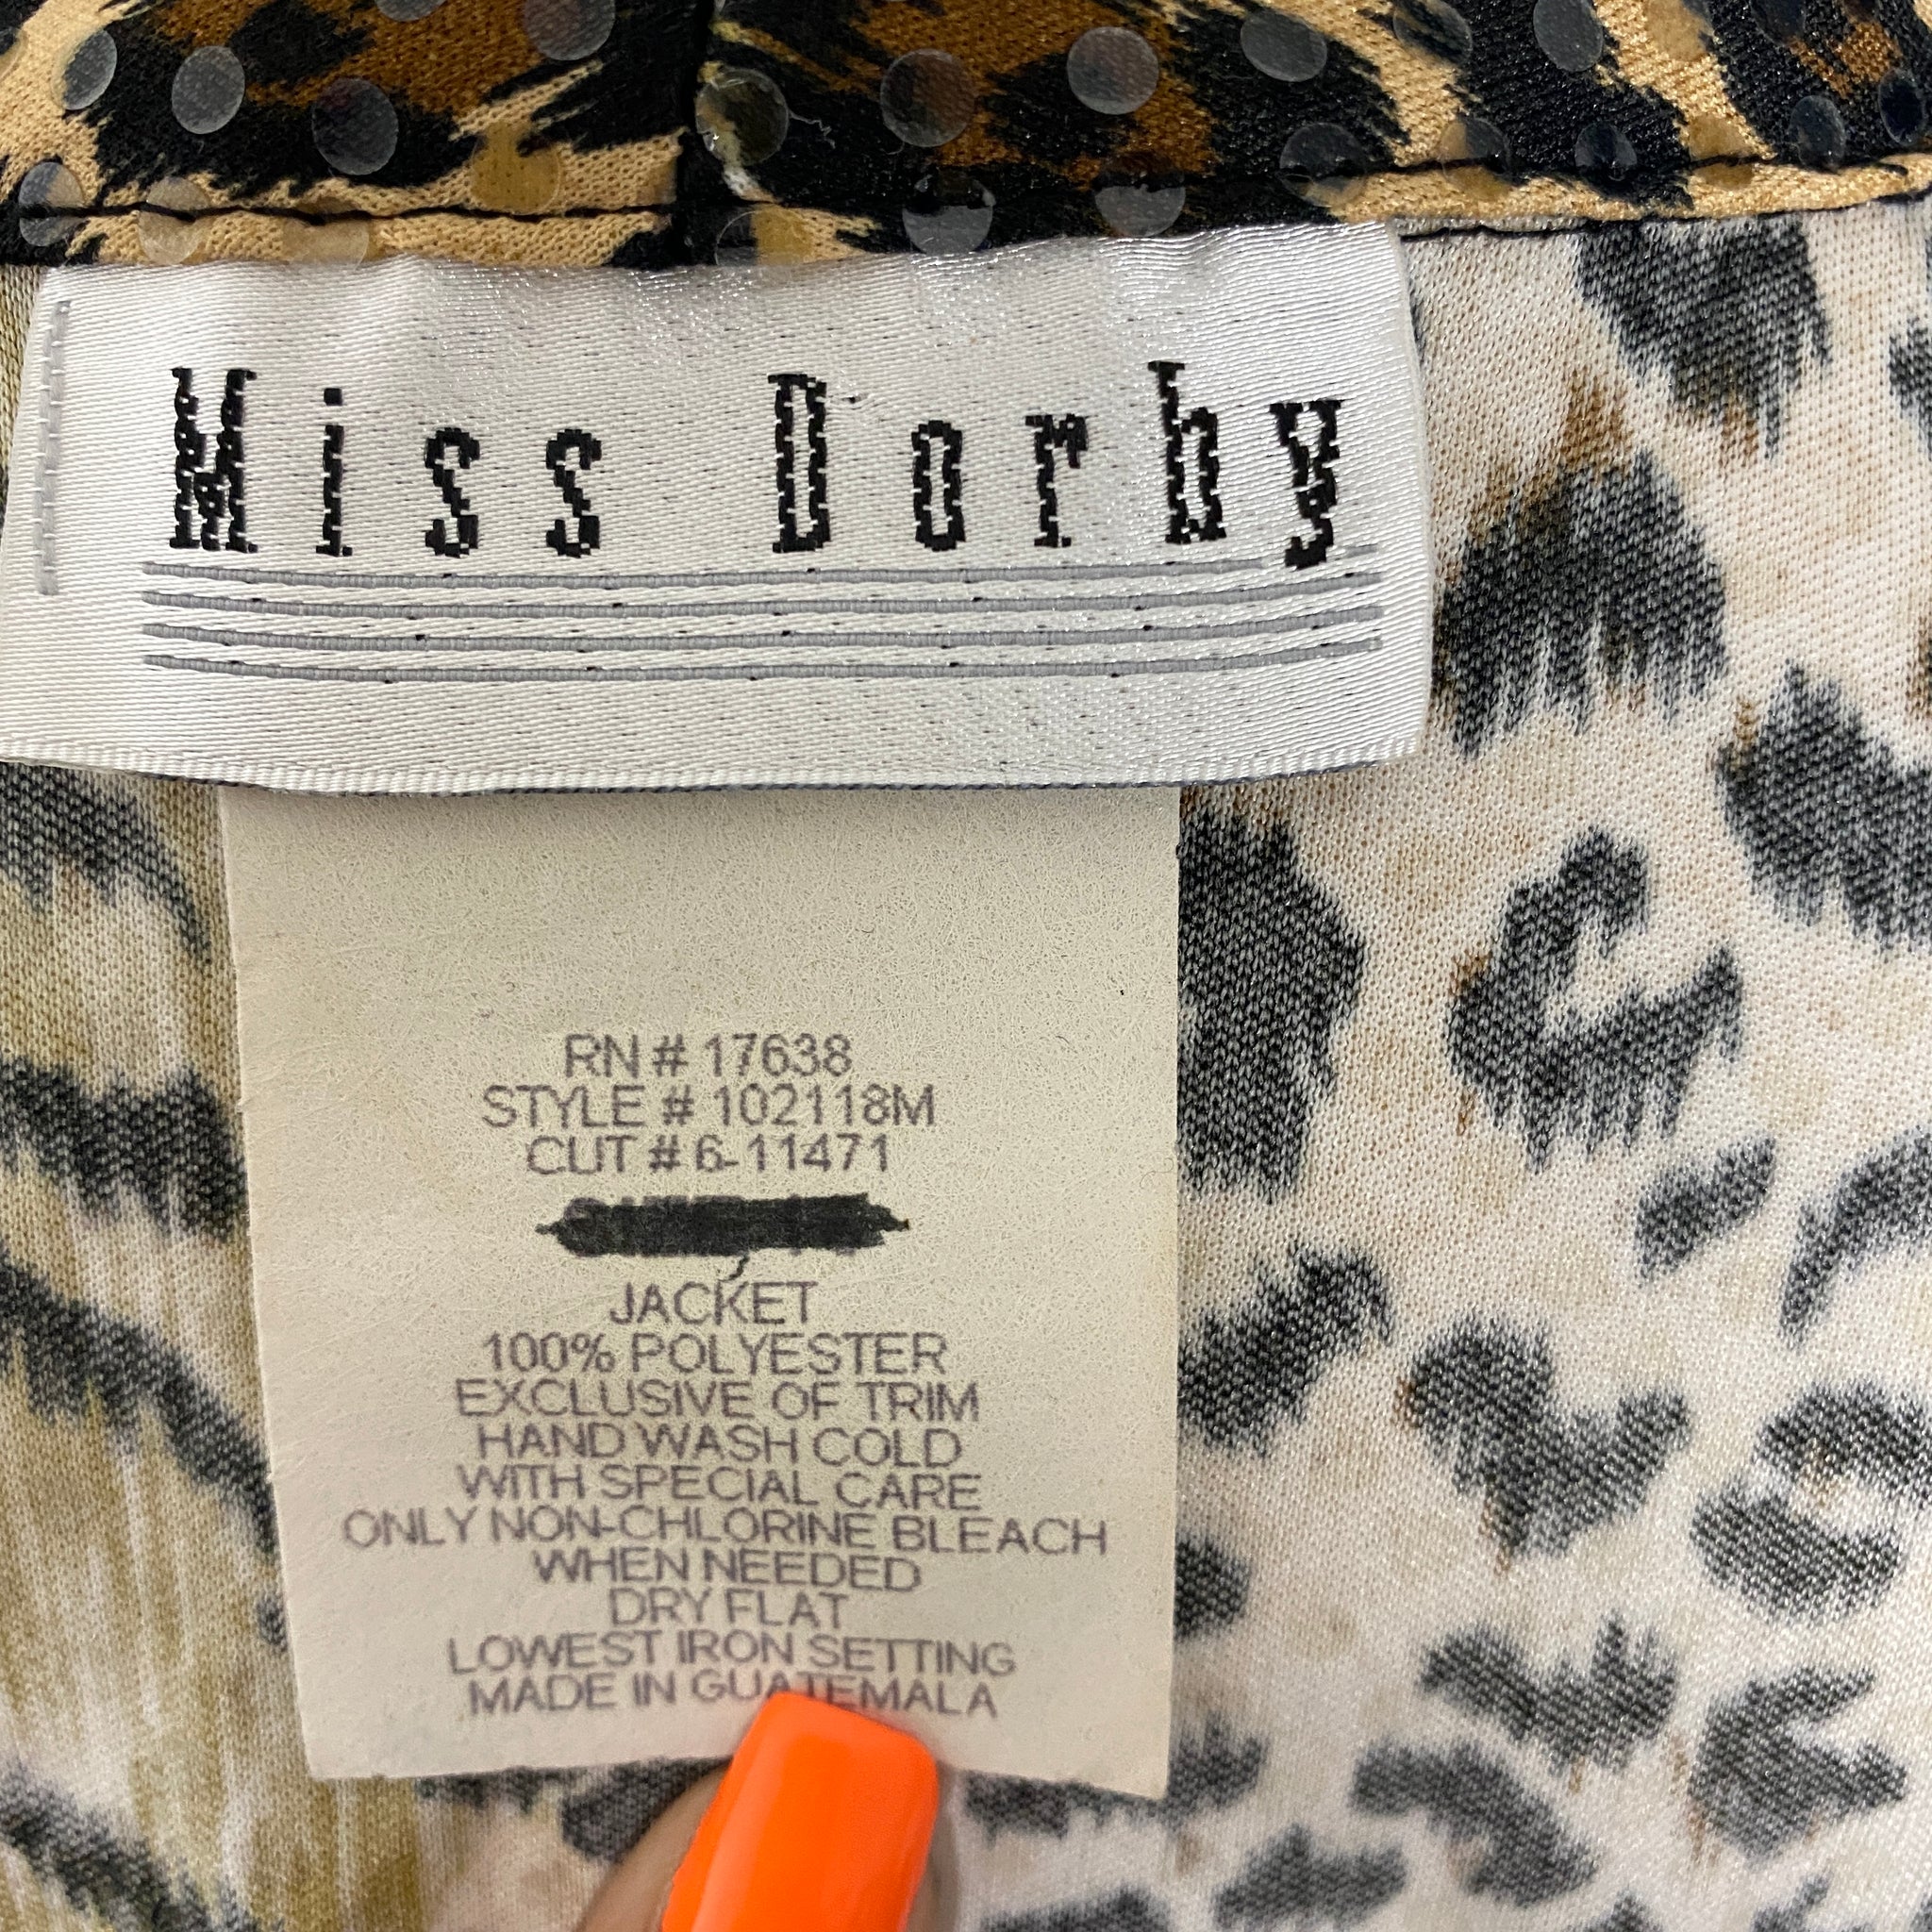 Miss Dorby Sequin Animal Print Jacket - Medium